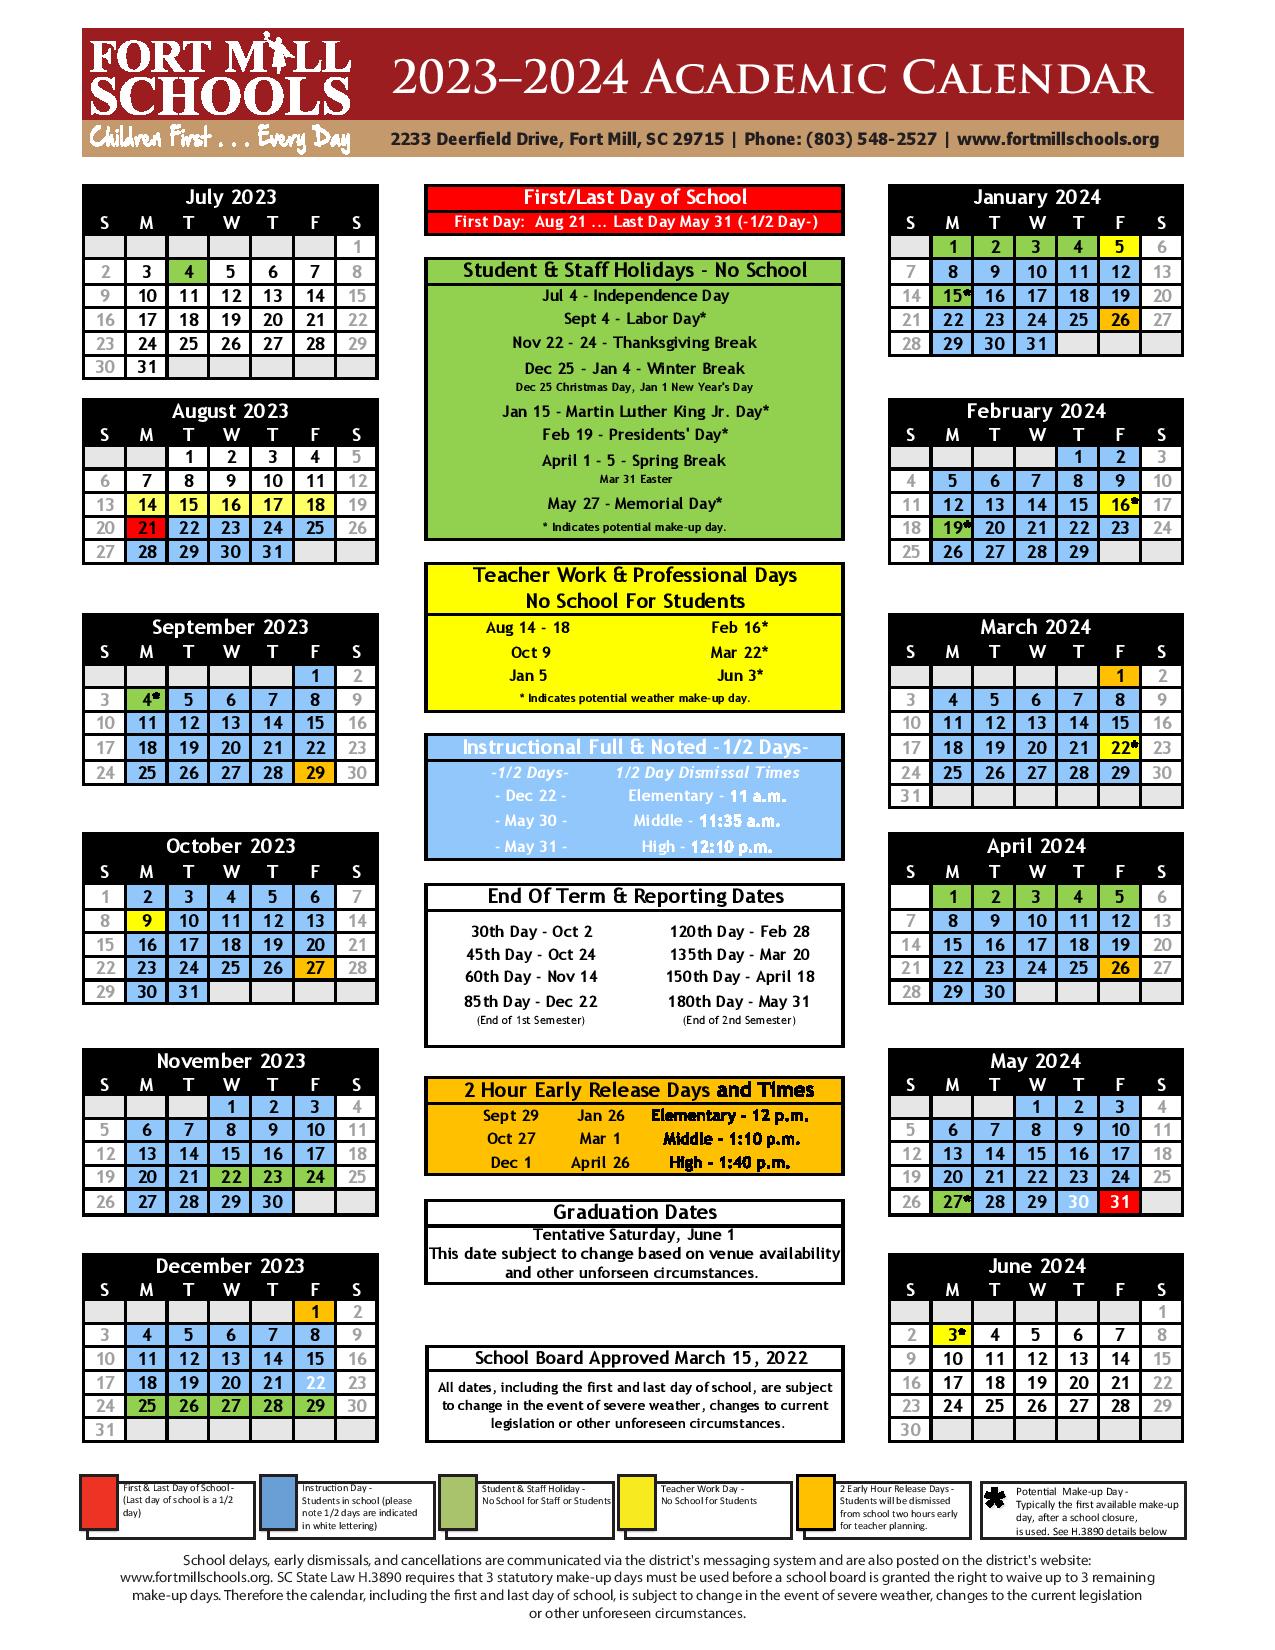 Fort Mill School District Calendar 20232024 in PDF